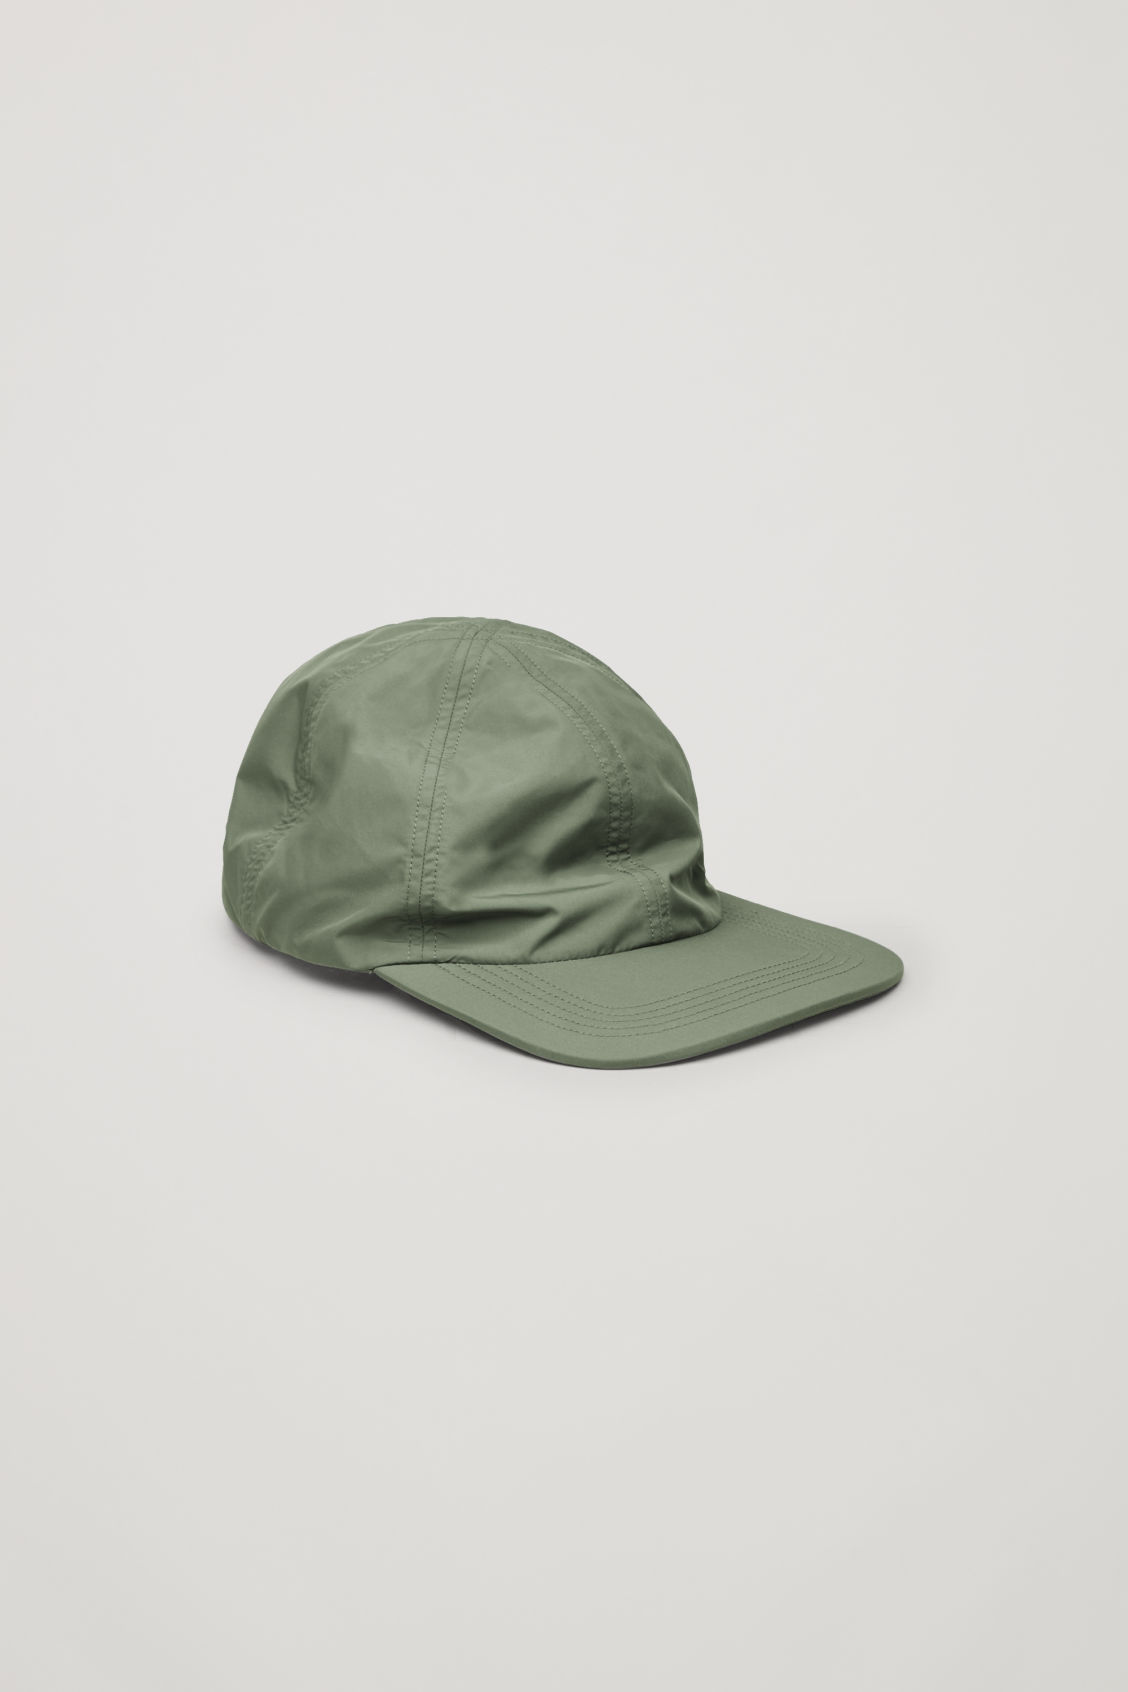 Cos Technical Soft Cap In Green | ModeSens